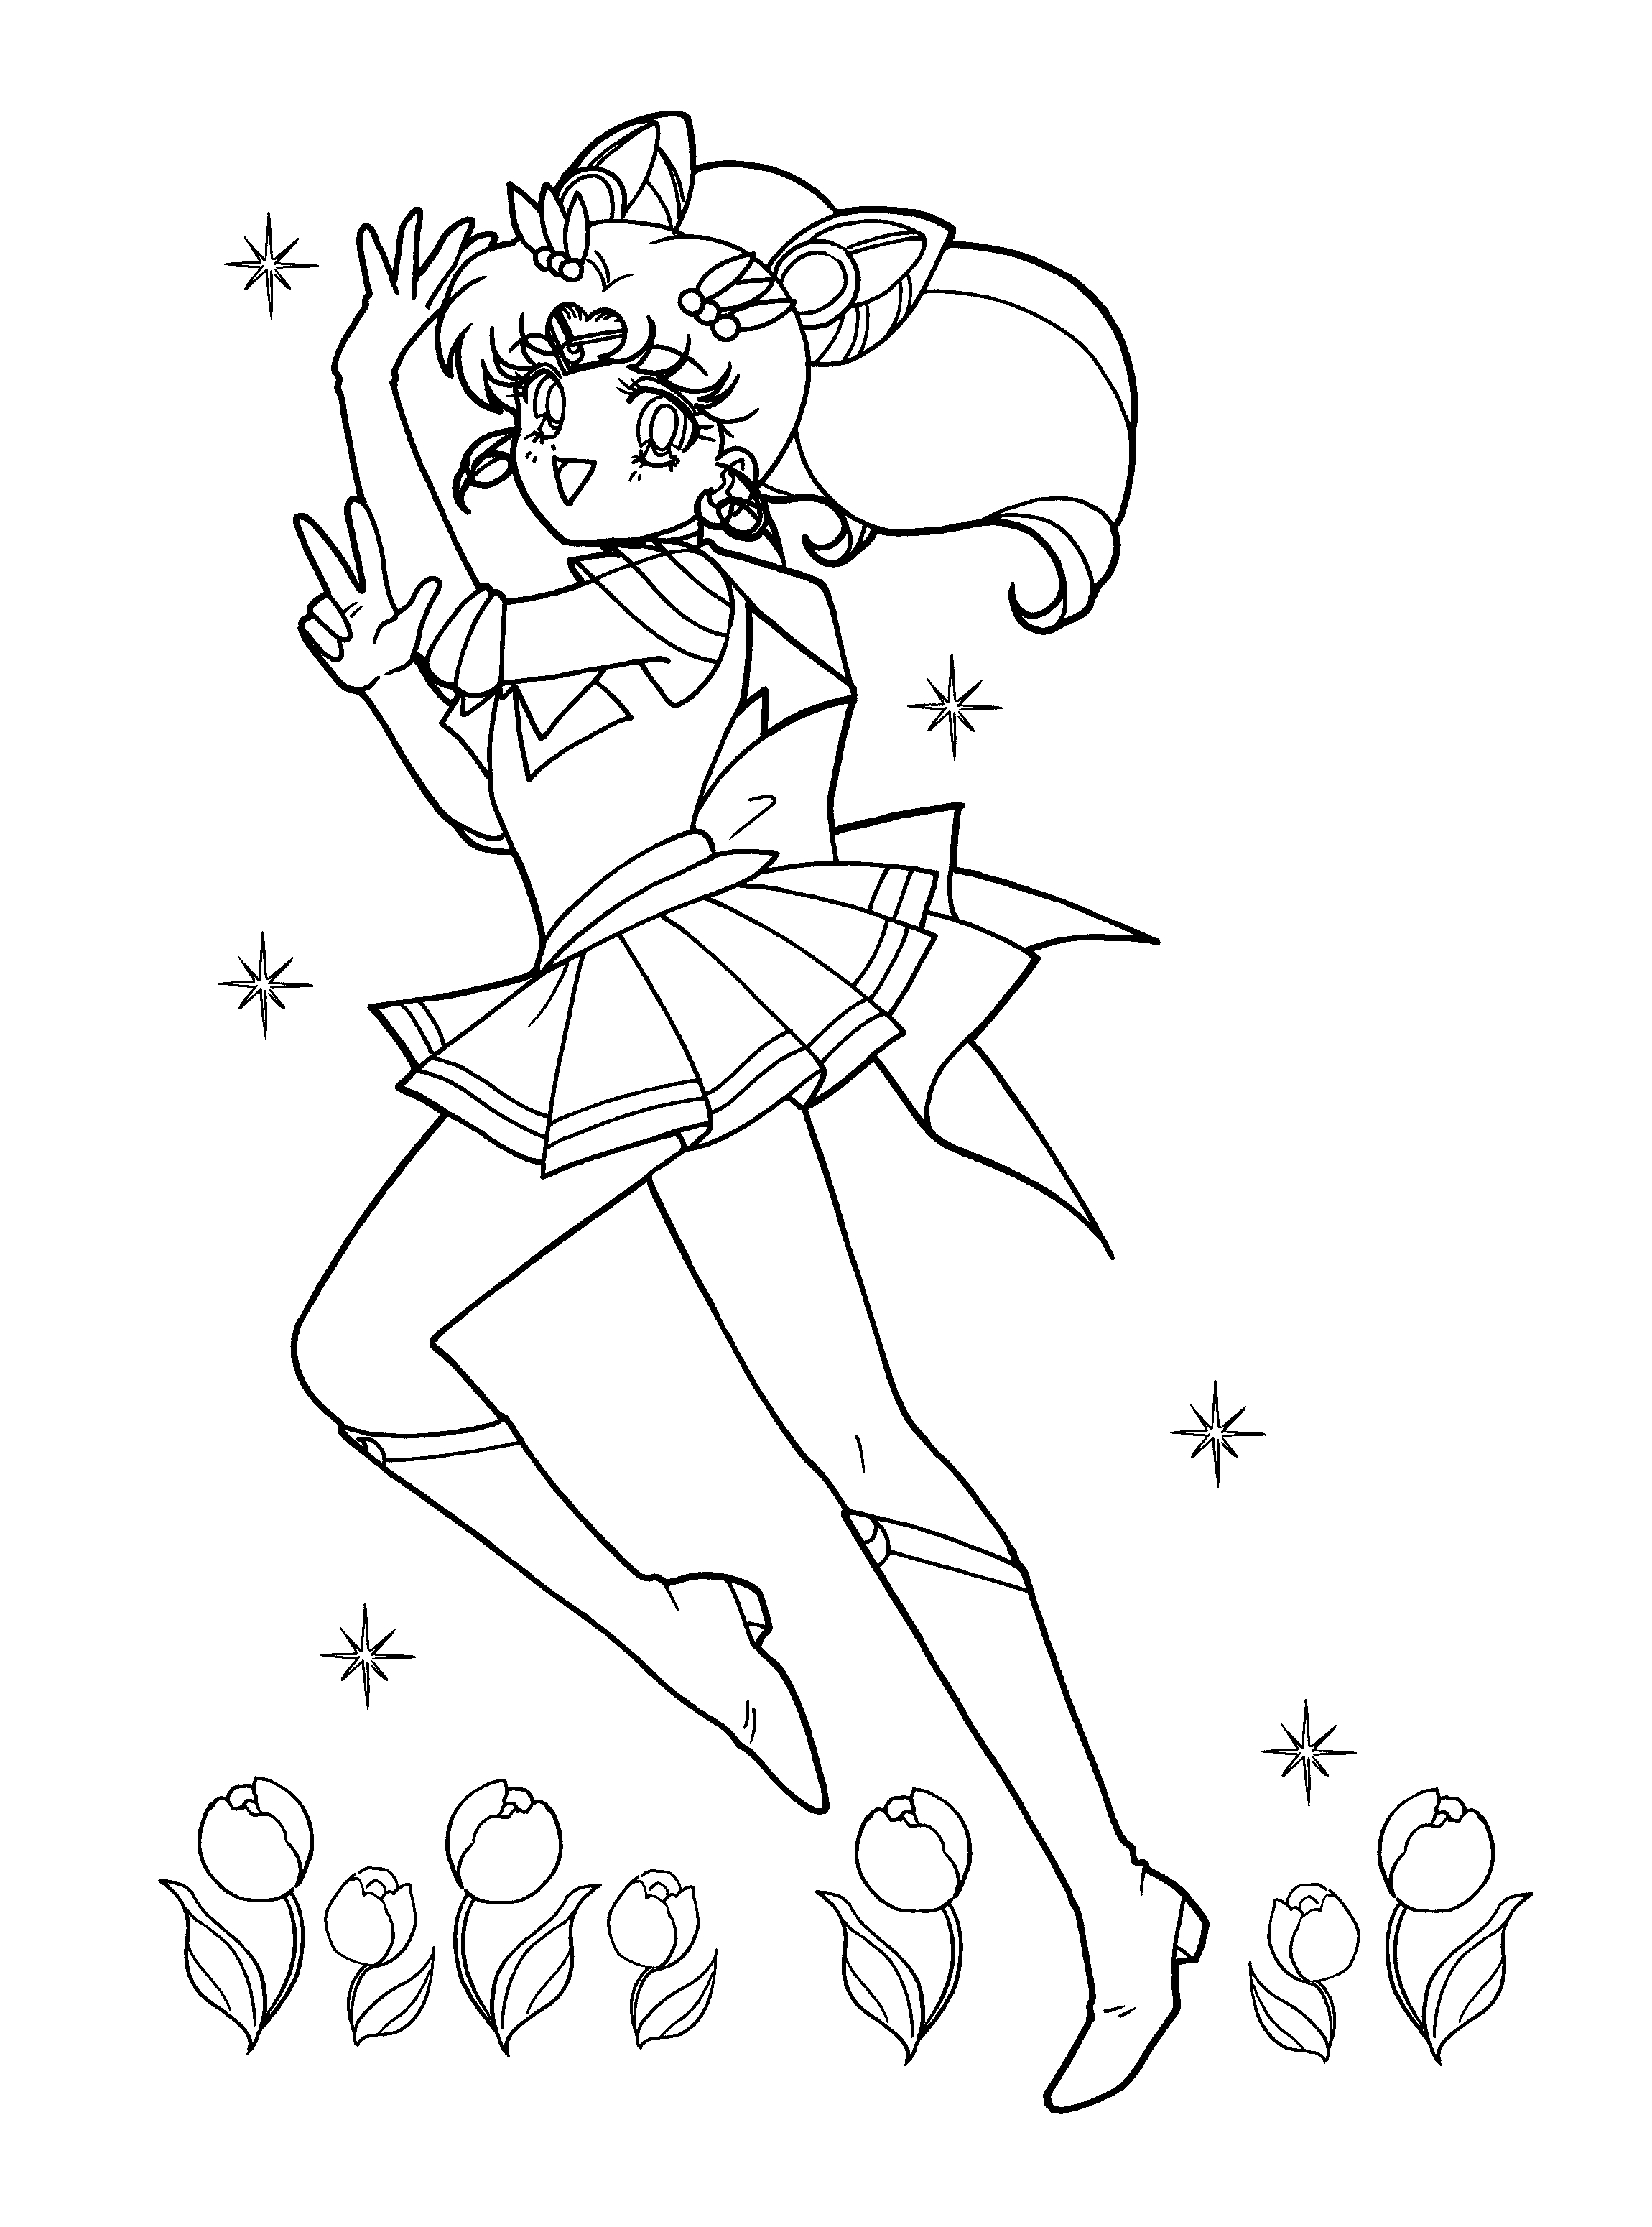 Sailormoon Malvorlagen